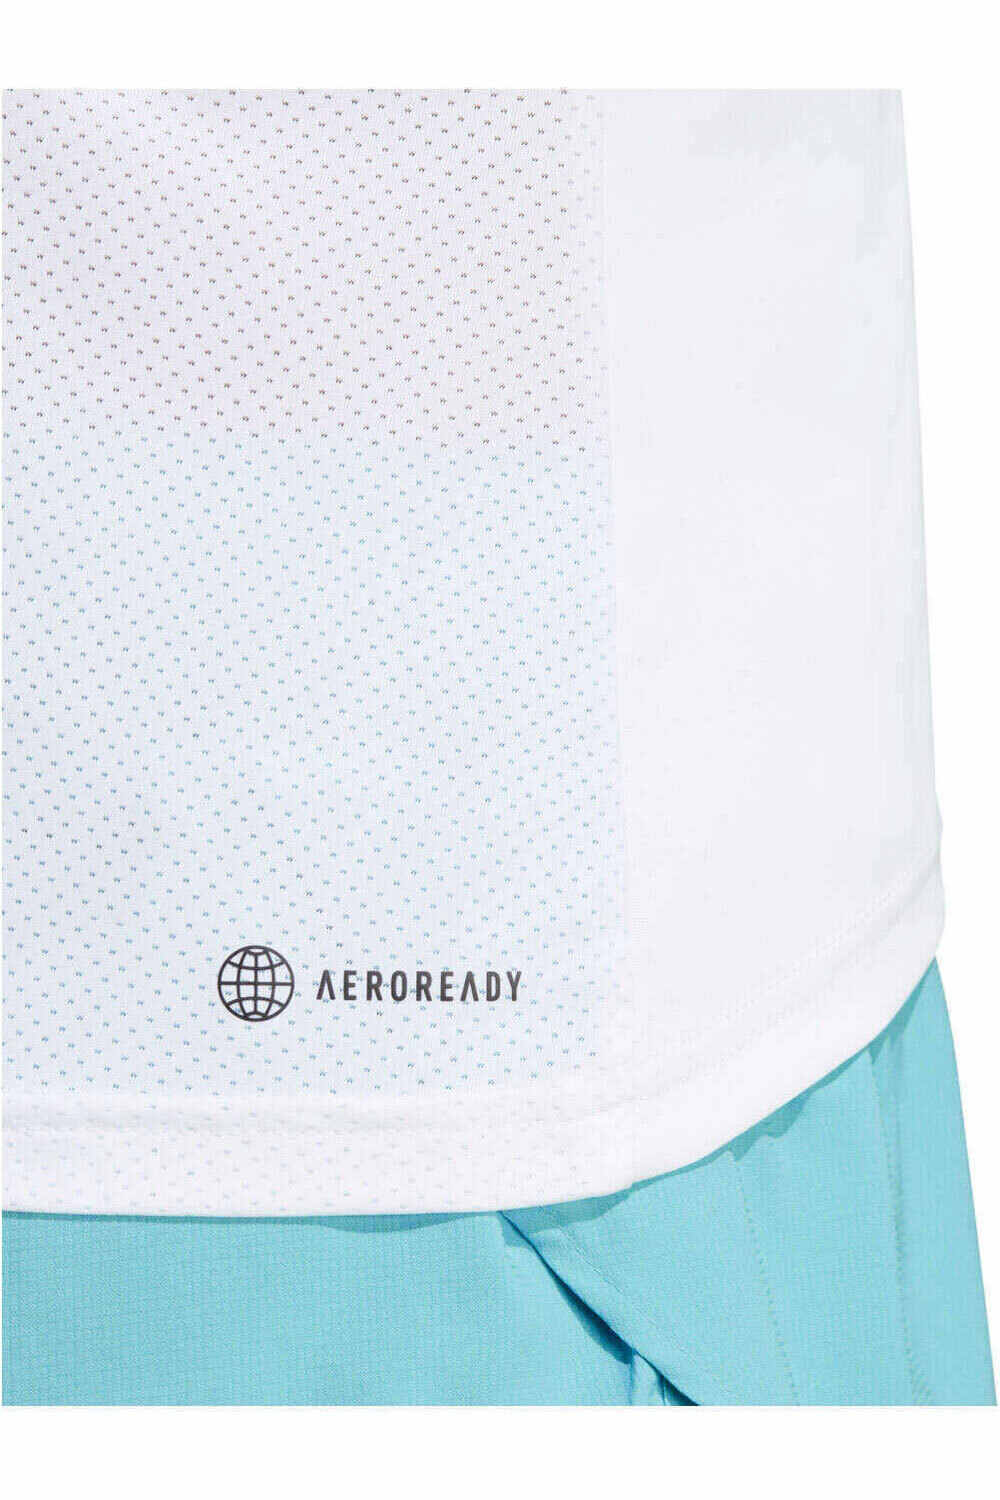 adidas camiseta tirantes mujer Club Tennis vista detalle